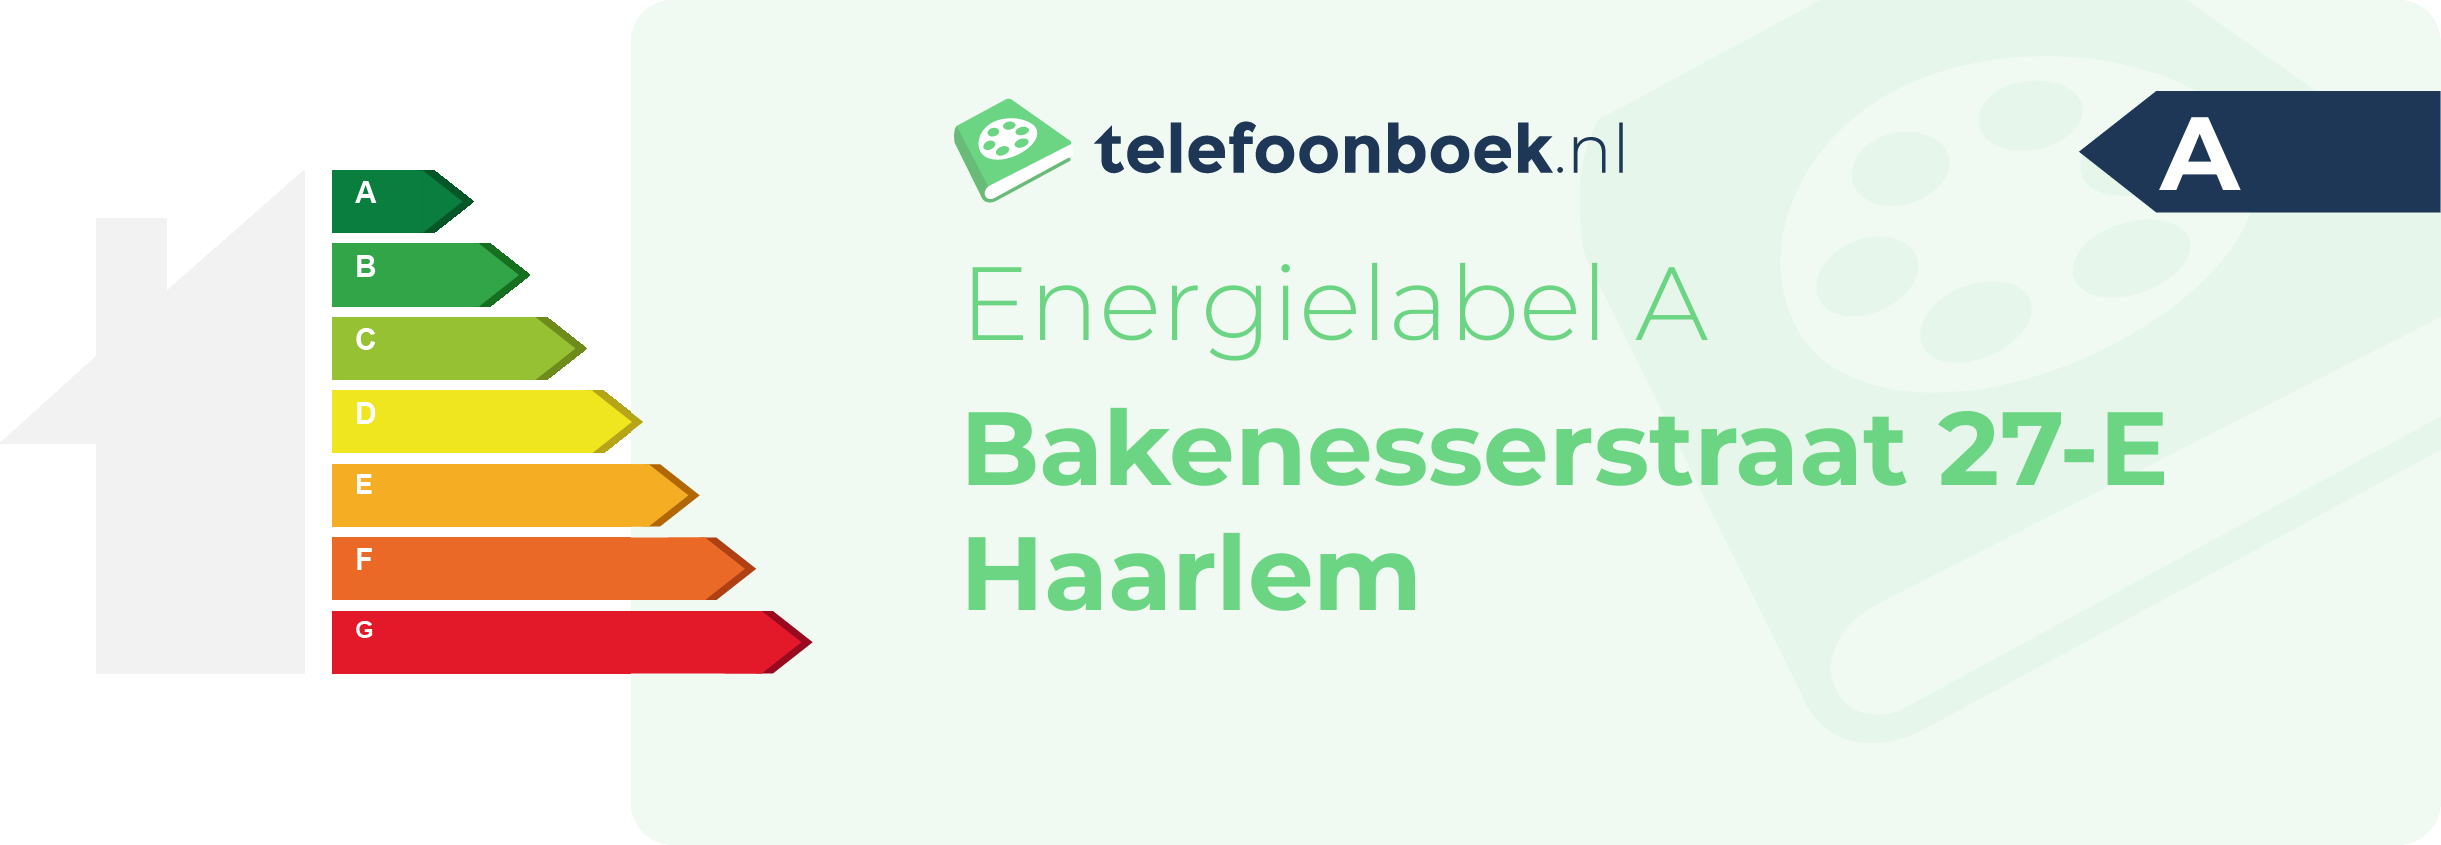 Energielabel Bakenesserstraat 27-E Haarlem